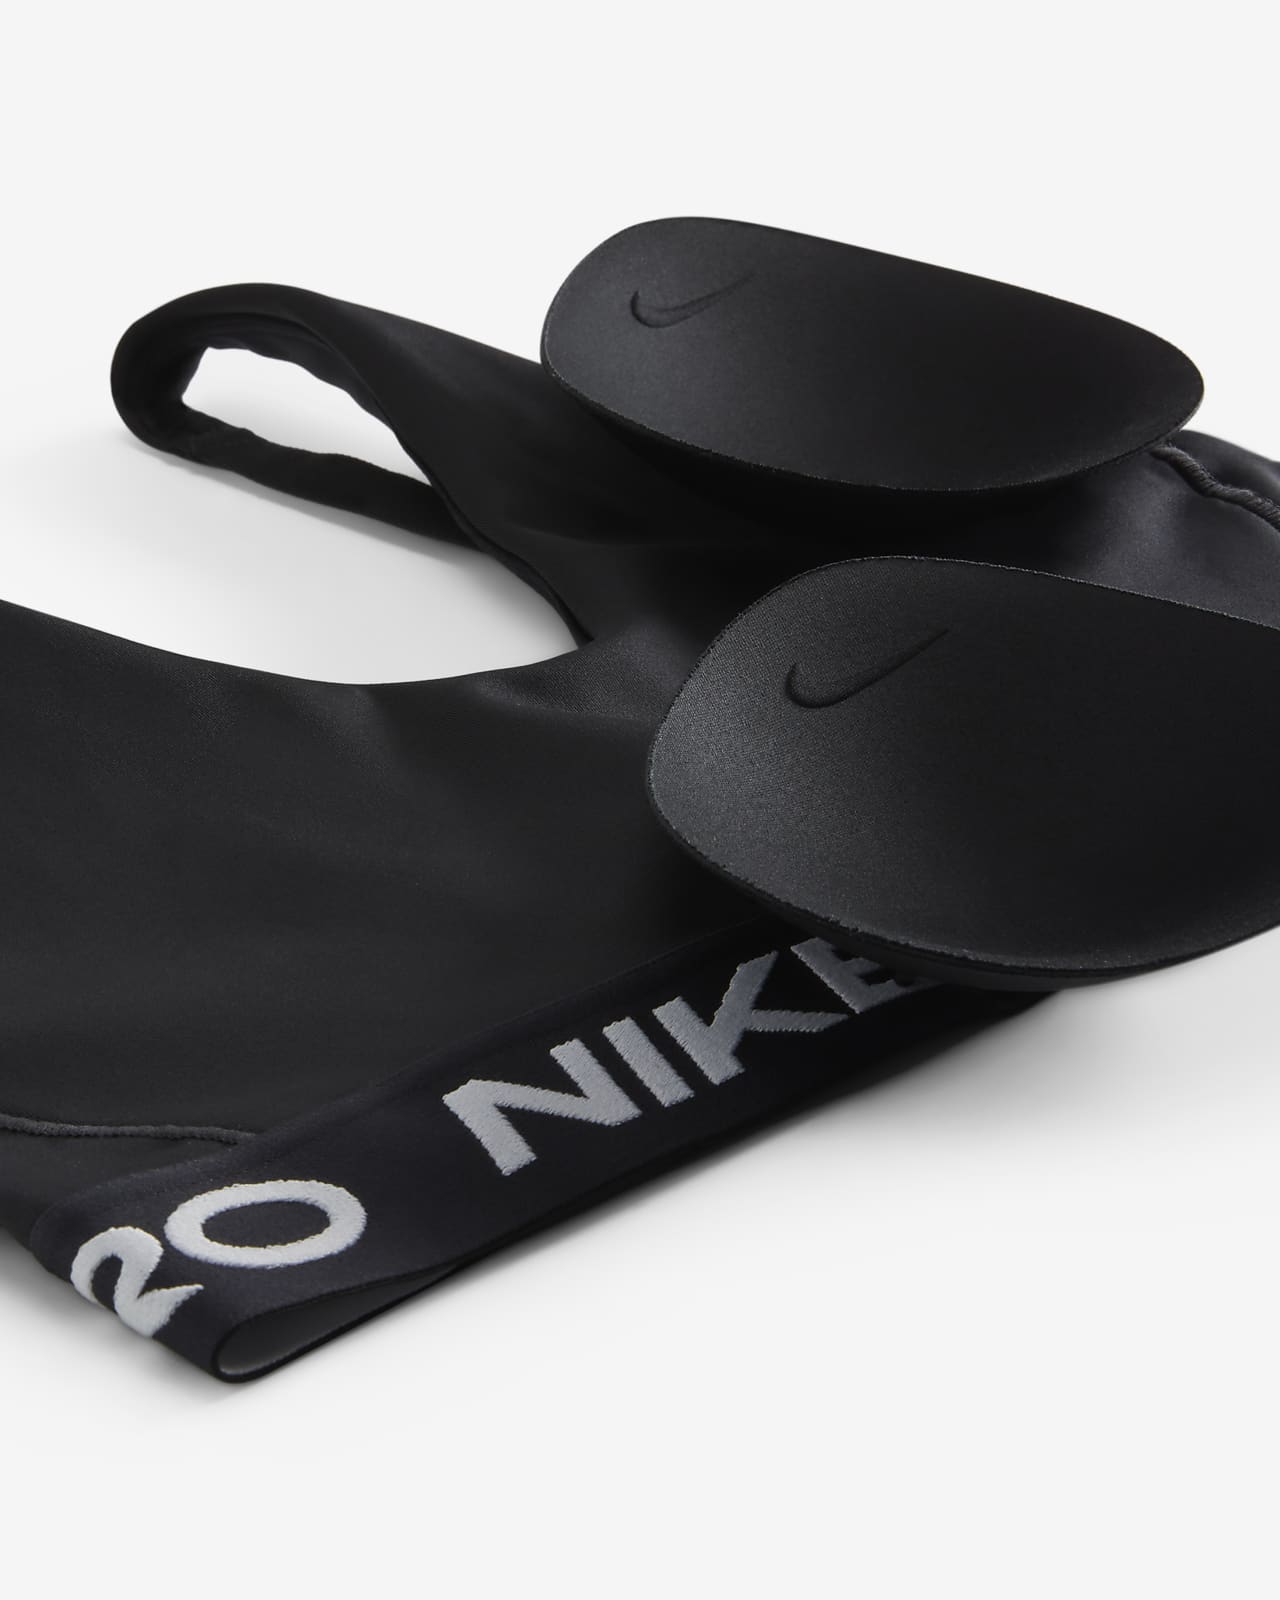 Nike Pro Womens Indy Plunge Medium Support Padded Sports Bra Pink XS